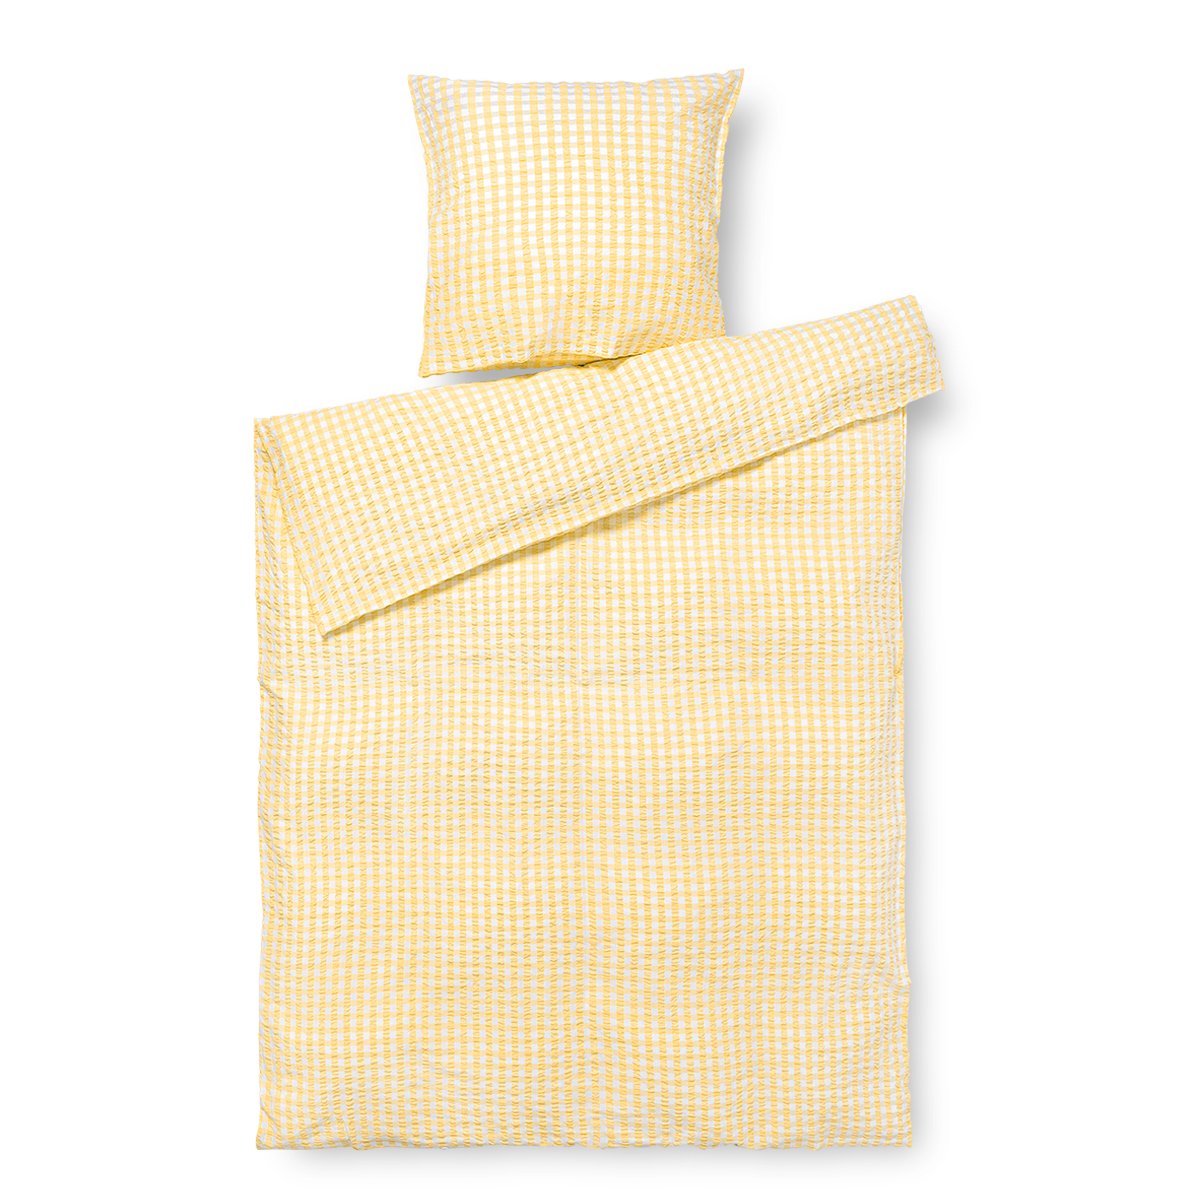 Juna - Organic Bed linen - Crisp  - 140 x 220 cm - Yellow